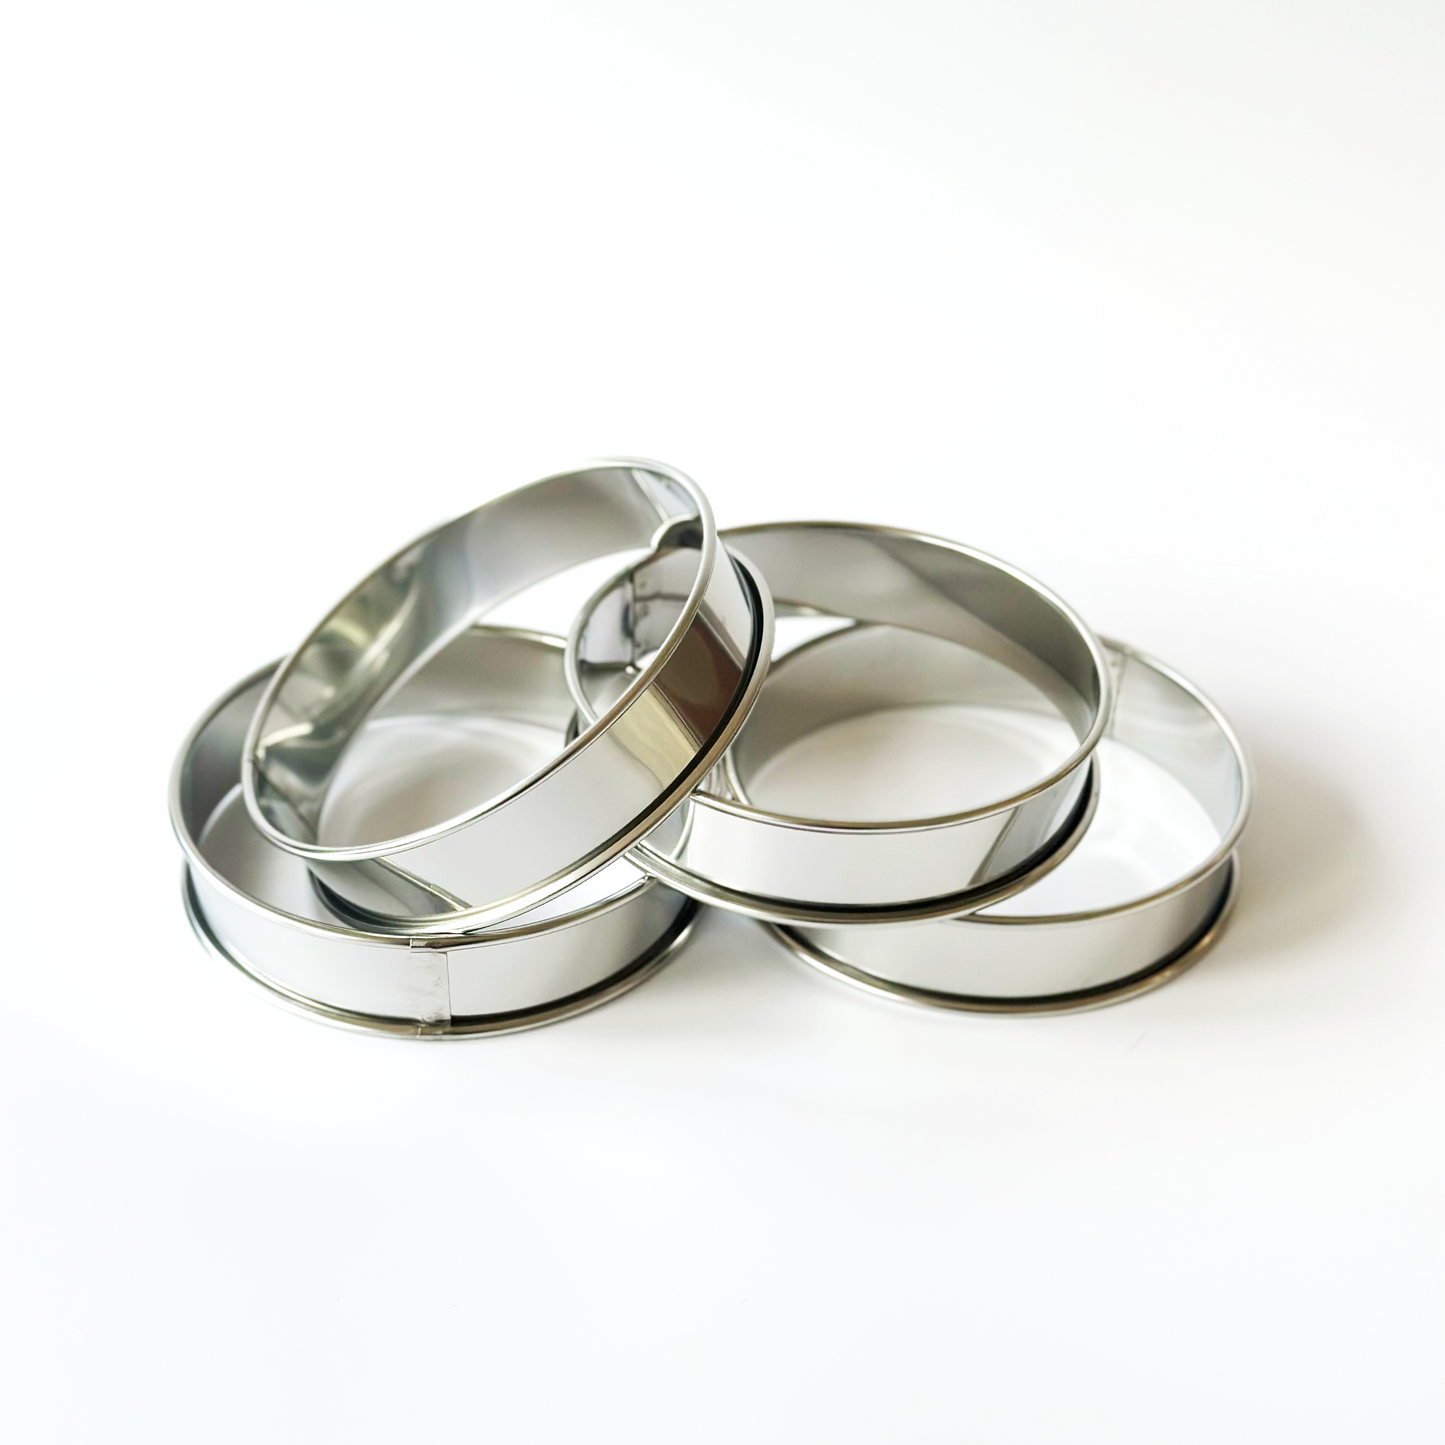 Stainless Steel Crumpet Rings (Set of 4)